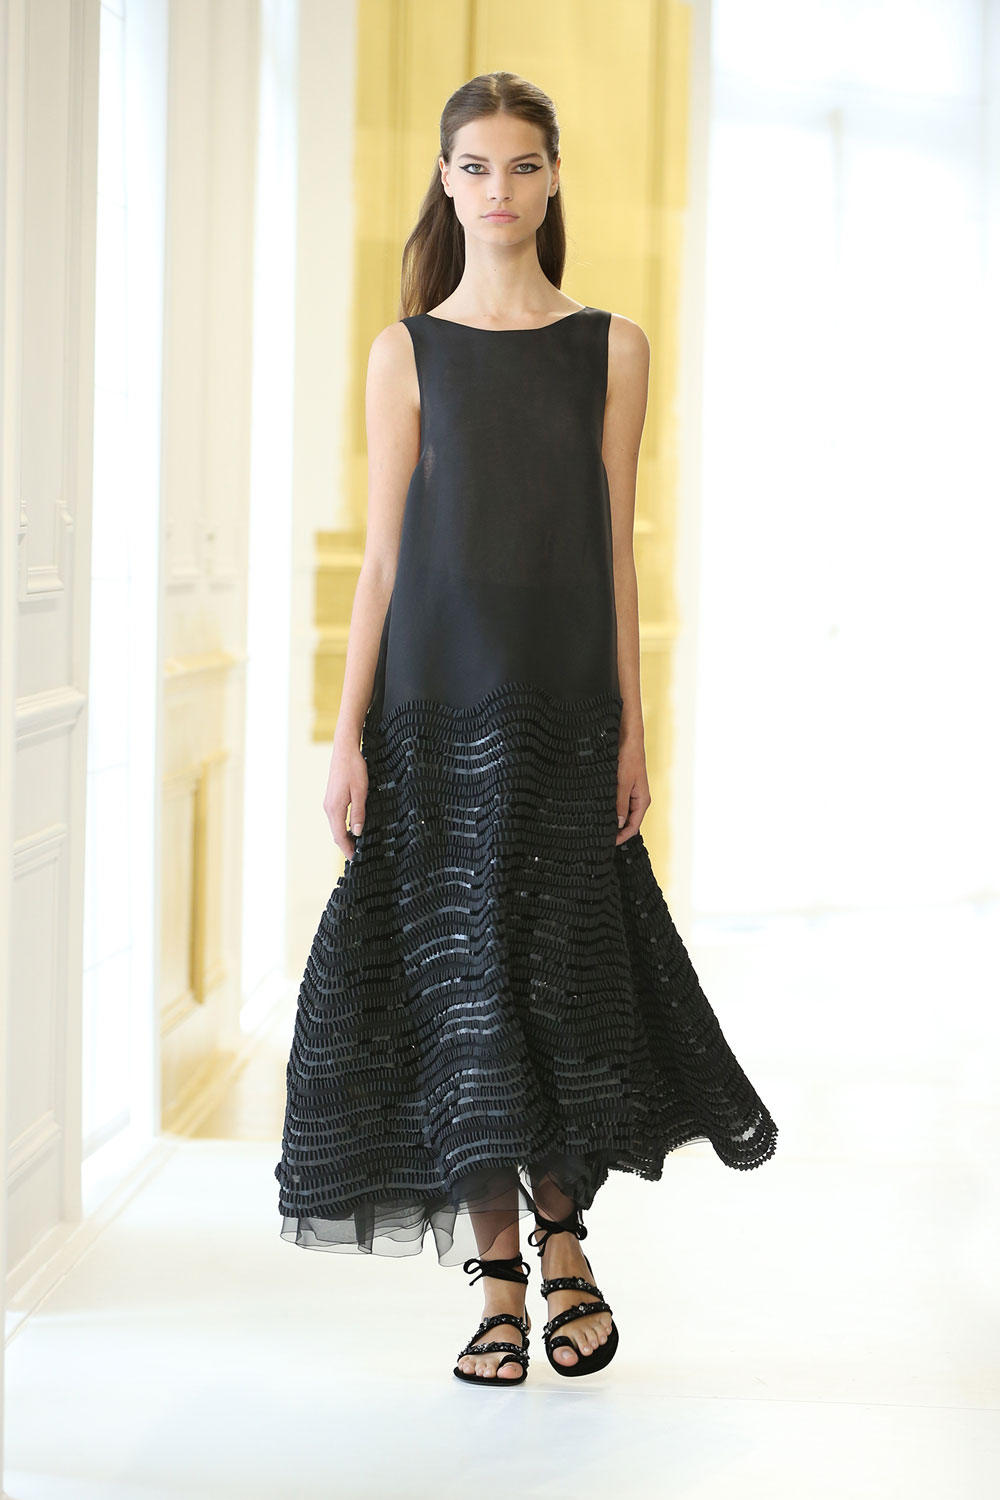 COUTURE FW16: Dior Redefines Contemporary Simplicity